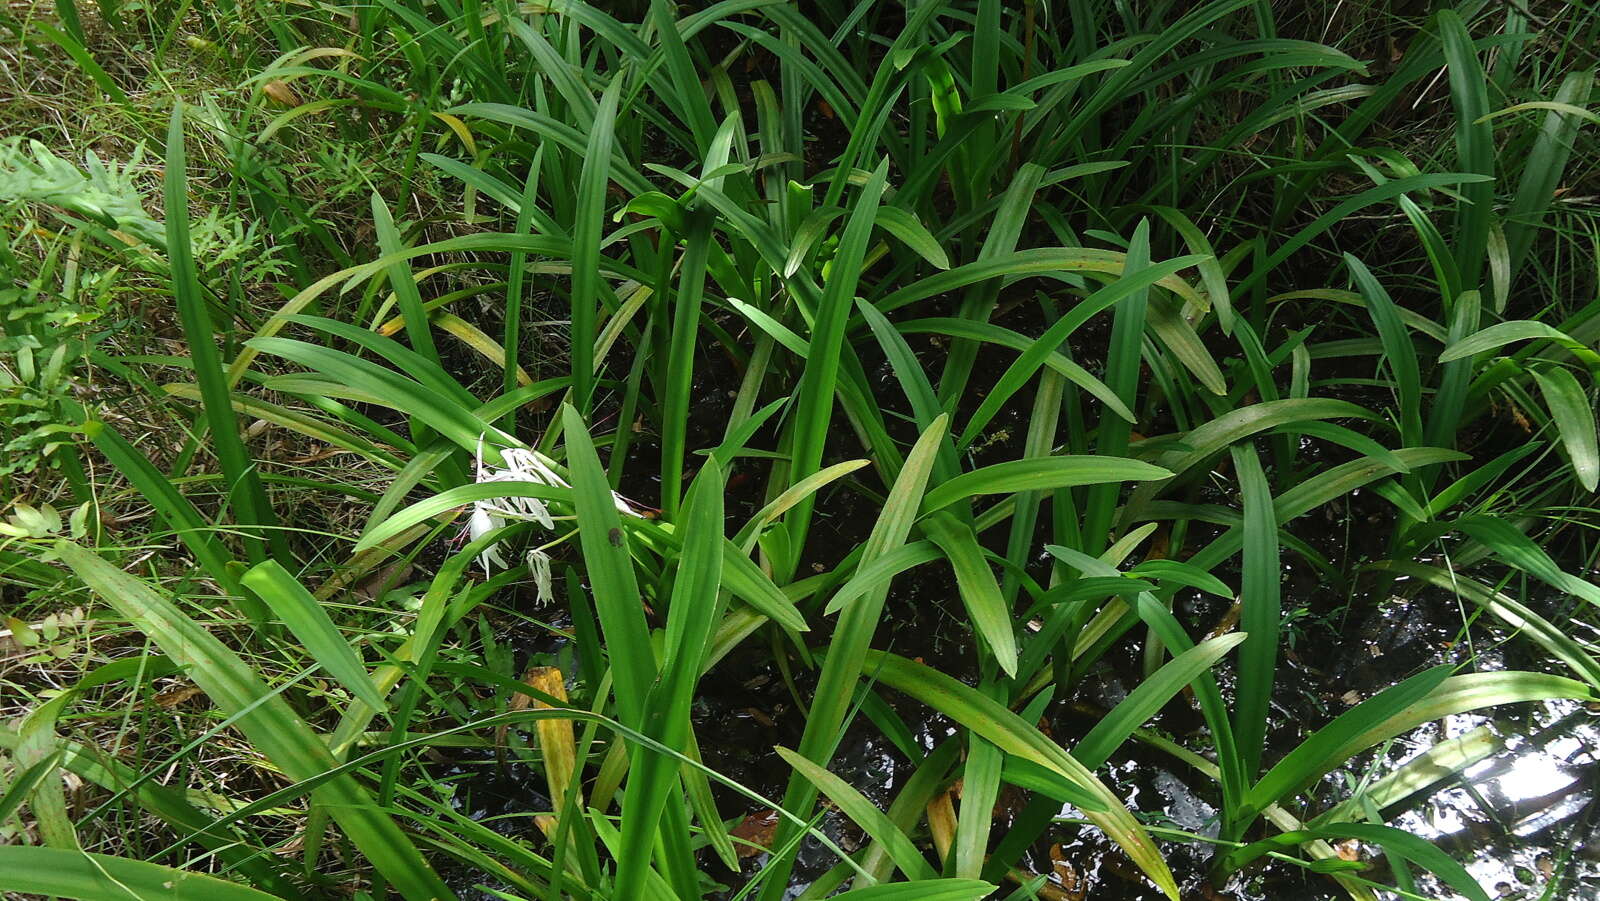 Image of swamplily